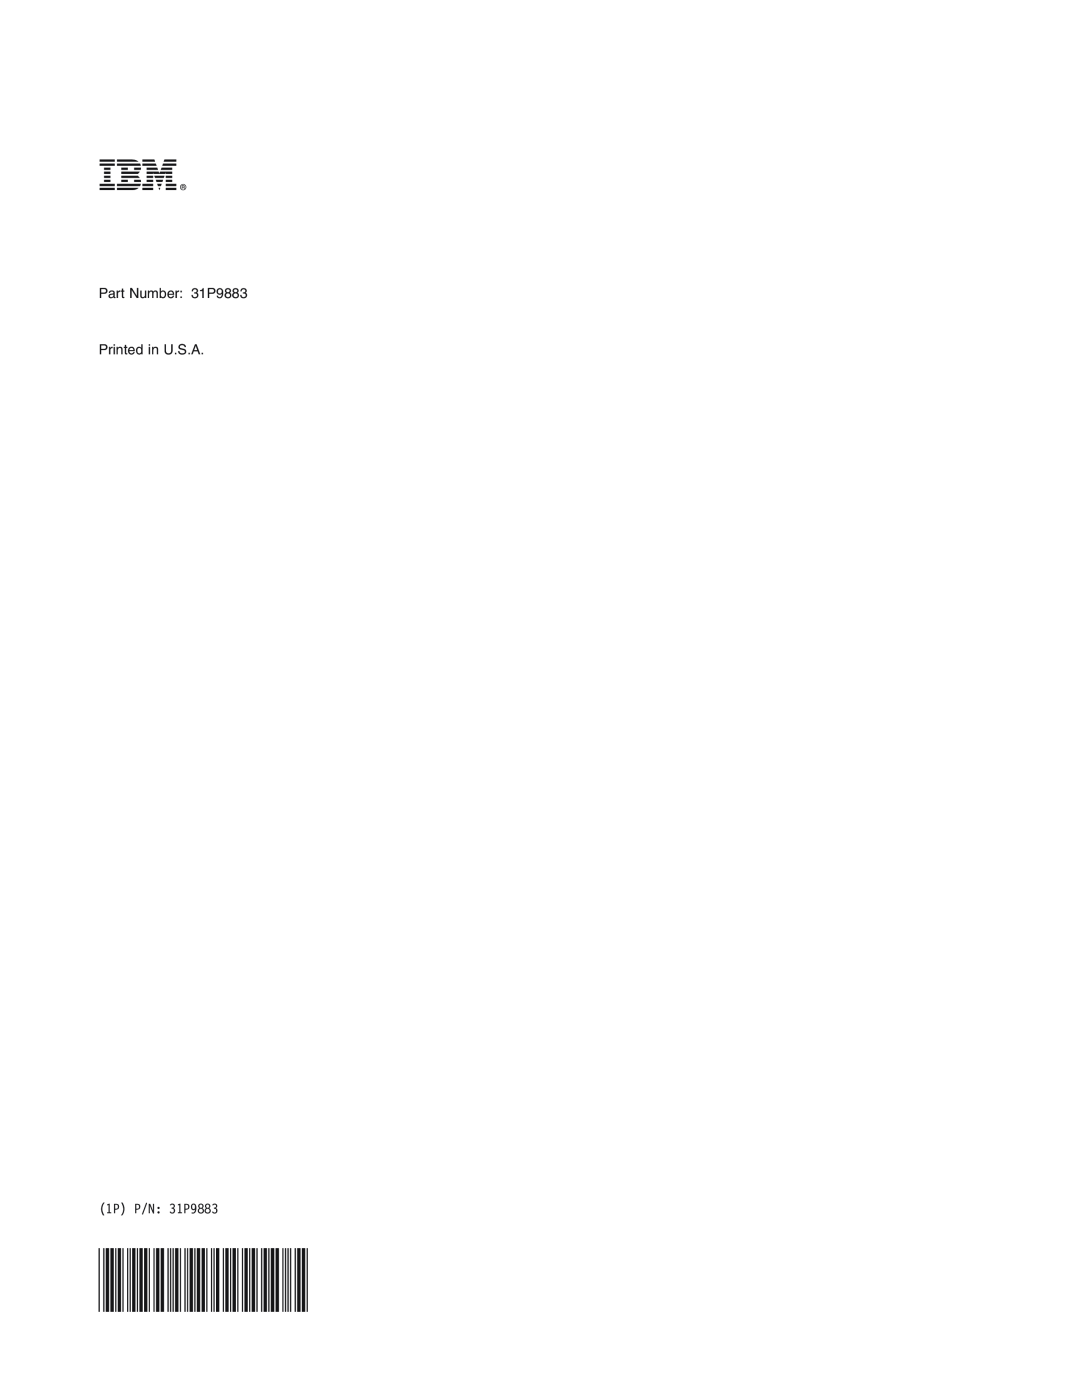 IBM Partner Pavilion iLV300 manual Part Number 31P9883 Printed in U.S.A, 1P P/N 31P9883 